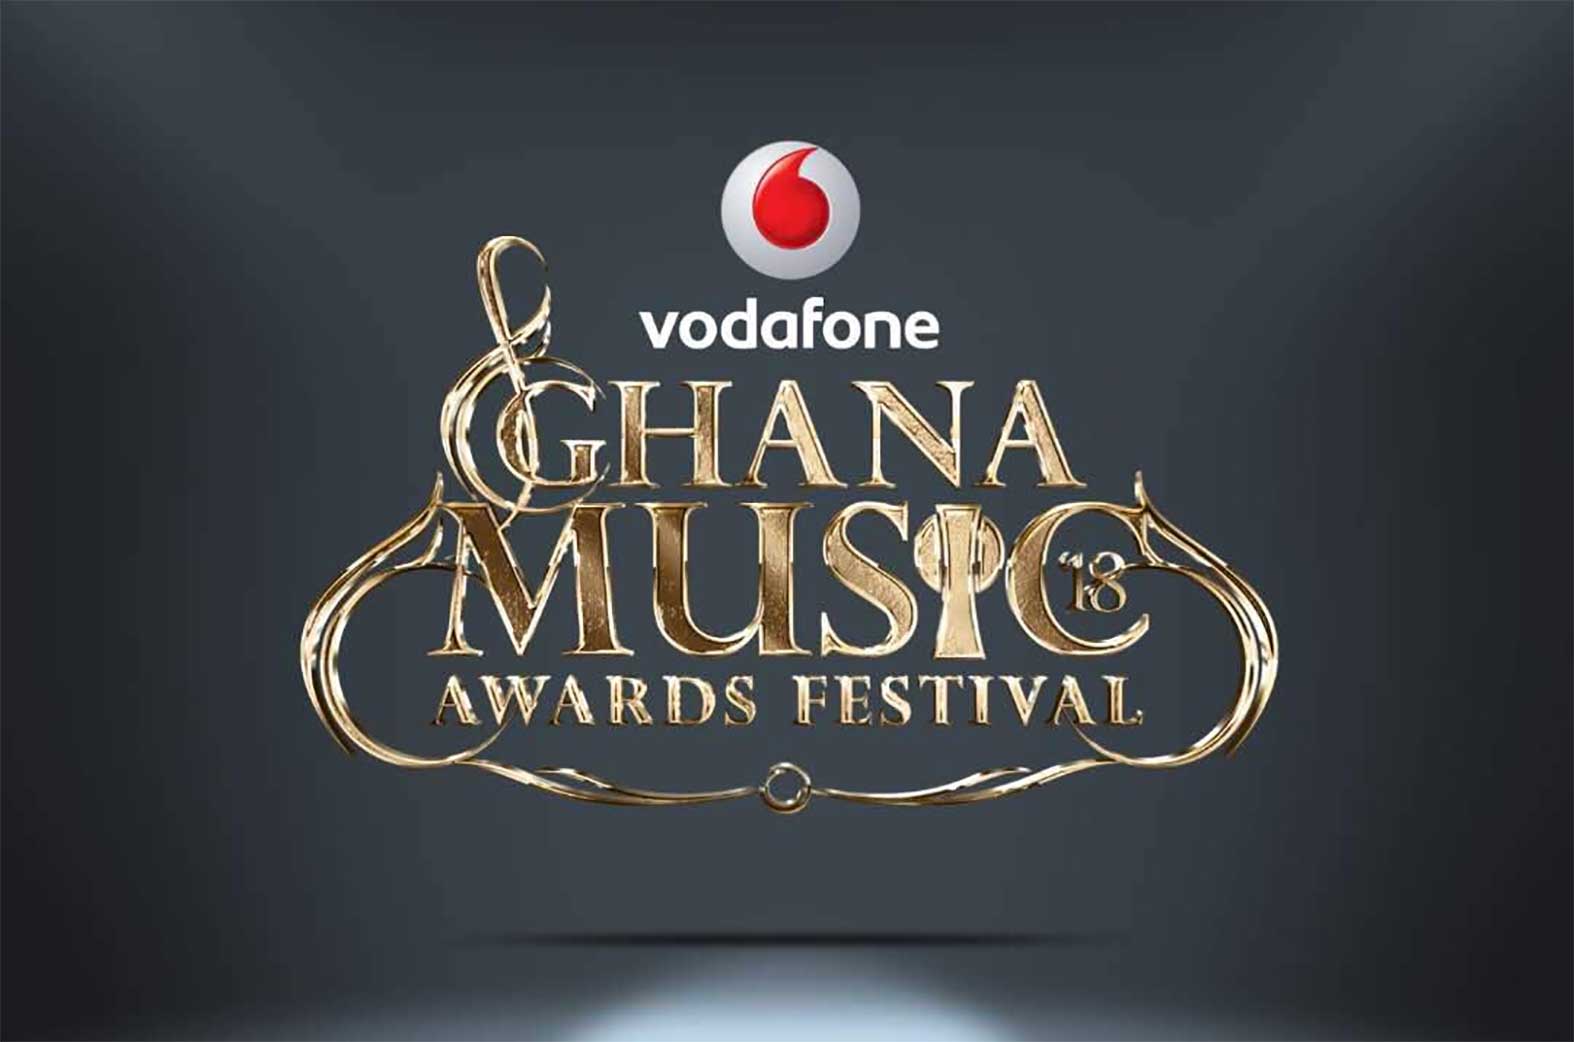 Vodafone Ghana Music Awards 2018